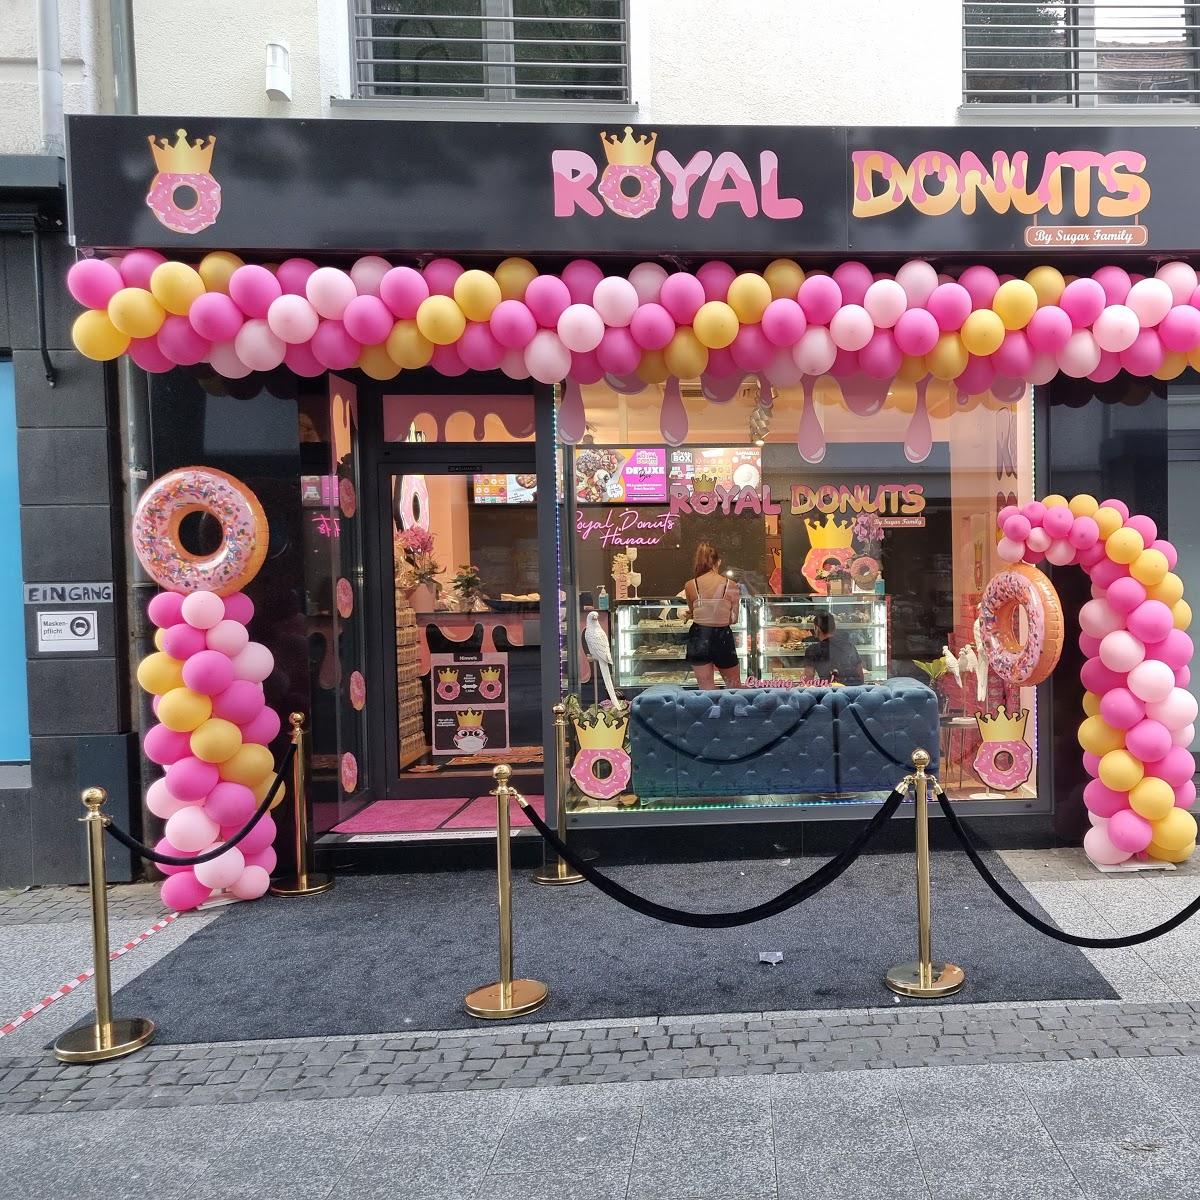 Restaurant "Royal Donuts" in Hanau